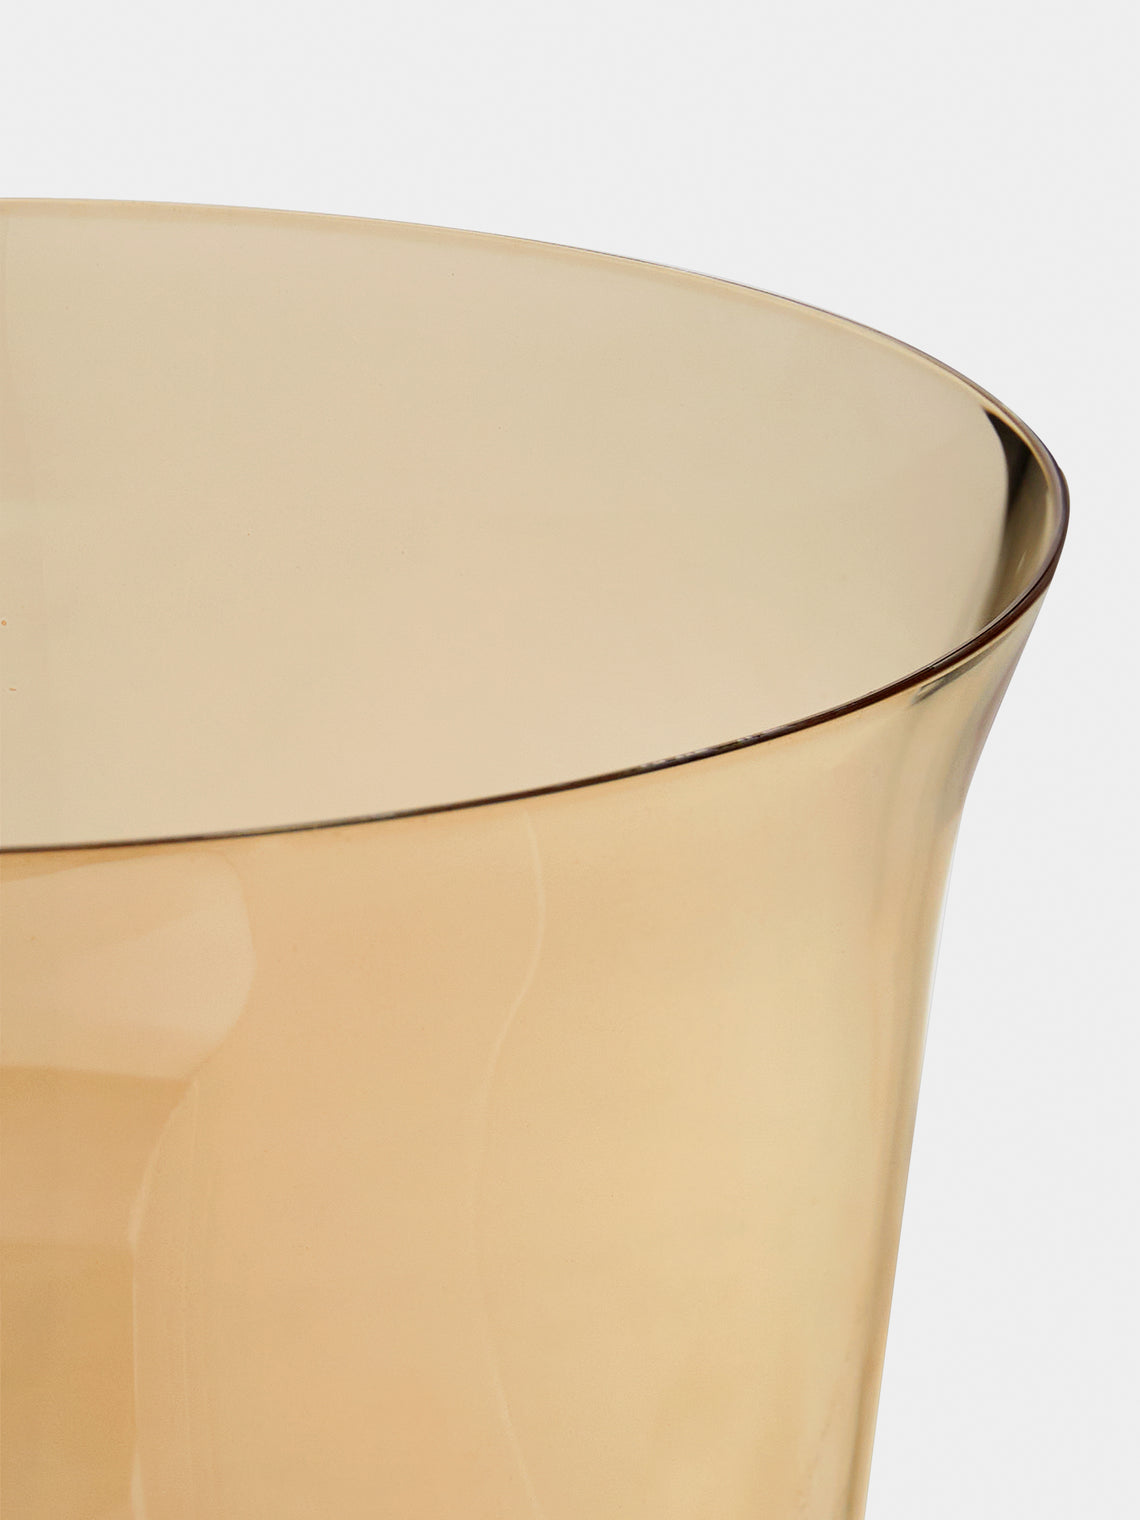 Lobmeyr - Patrician Gold Lustre Hand-Blown Crystal Vase - Gold - ABASK